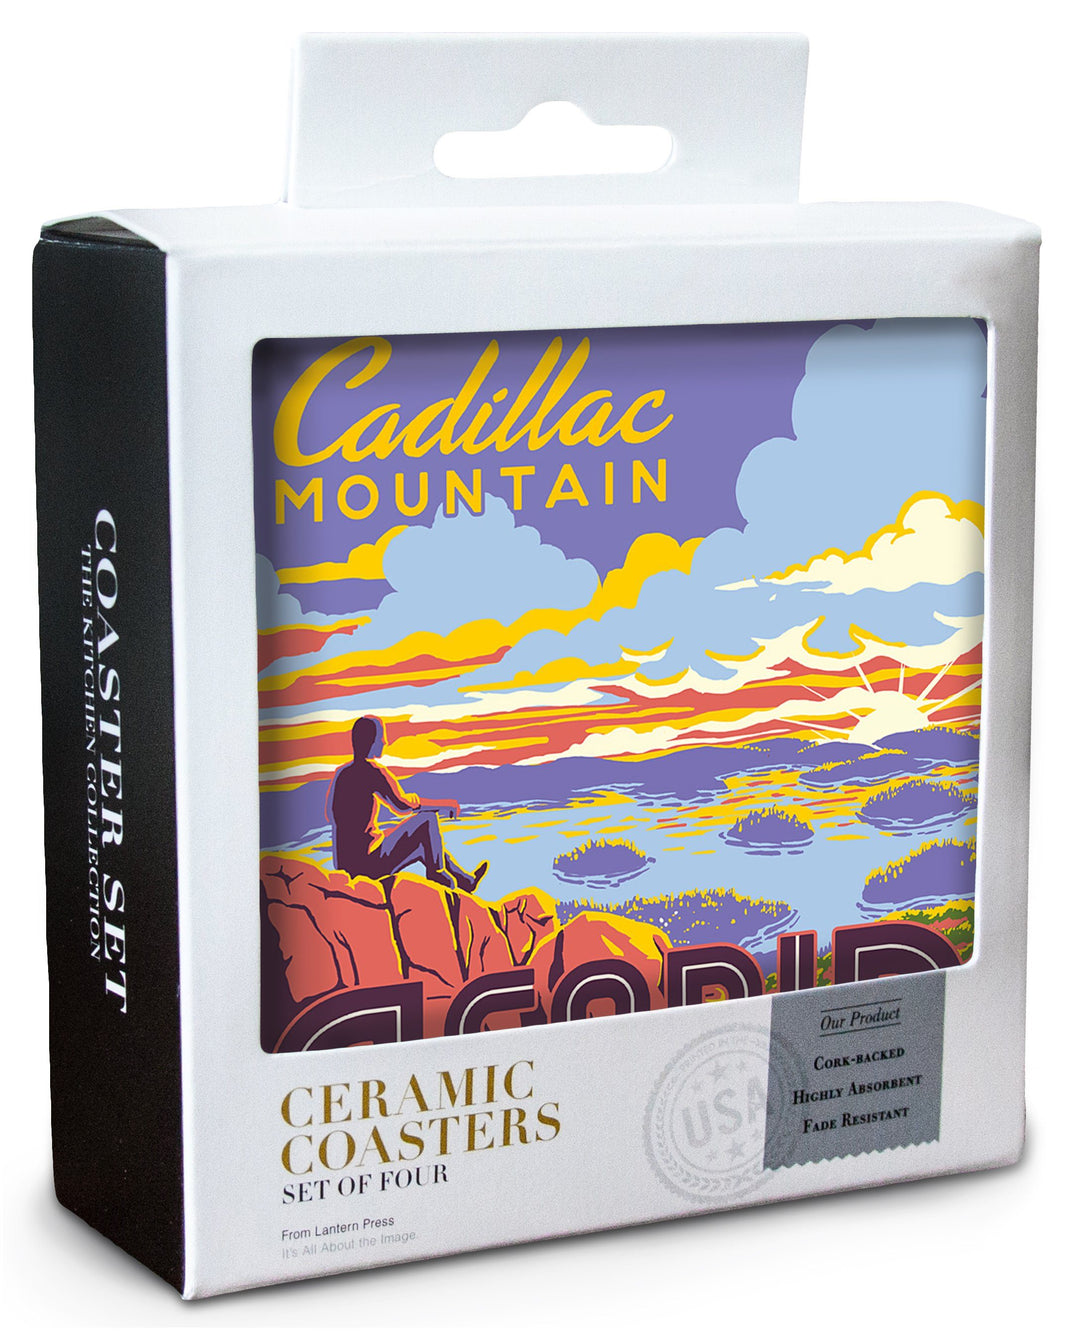 Acadia National Park, Maine, Explorer Series, Cadillac Mountain, Lantern Press Artwork, Coaster Set Coasters Lantern Press 